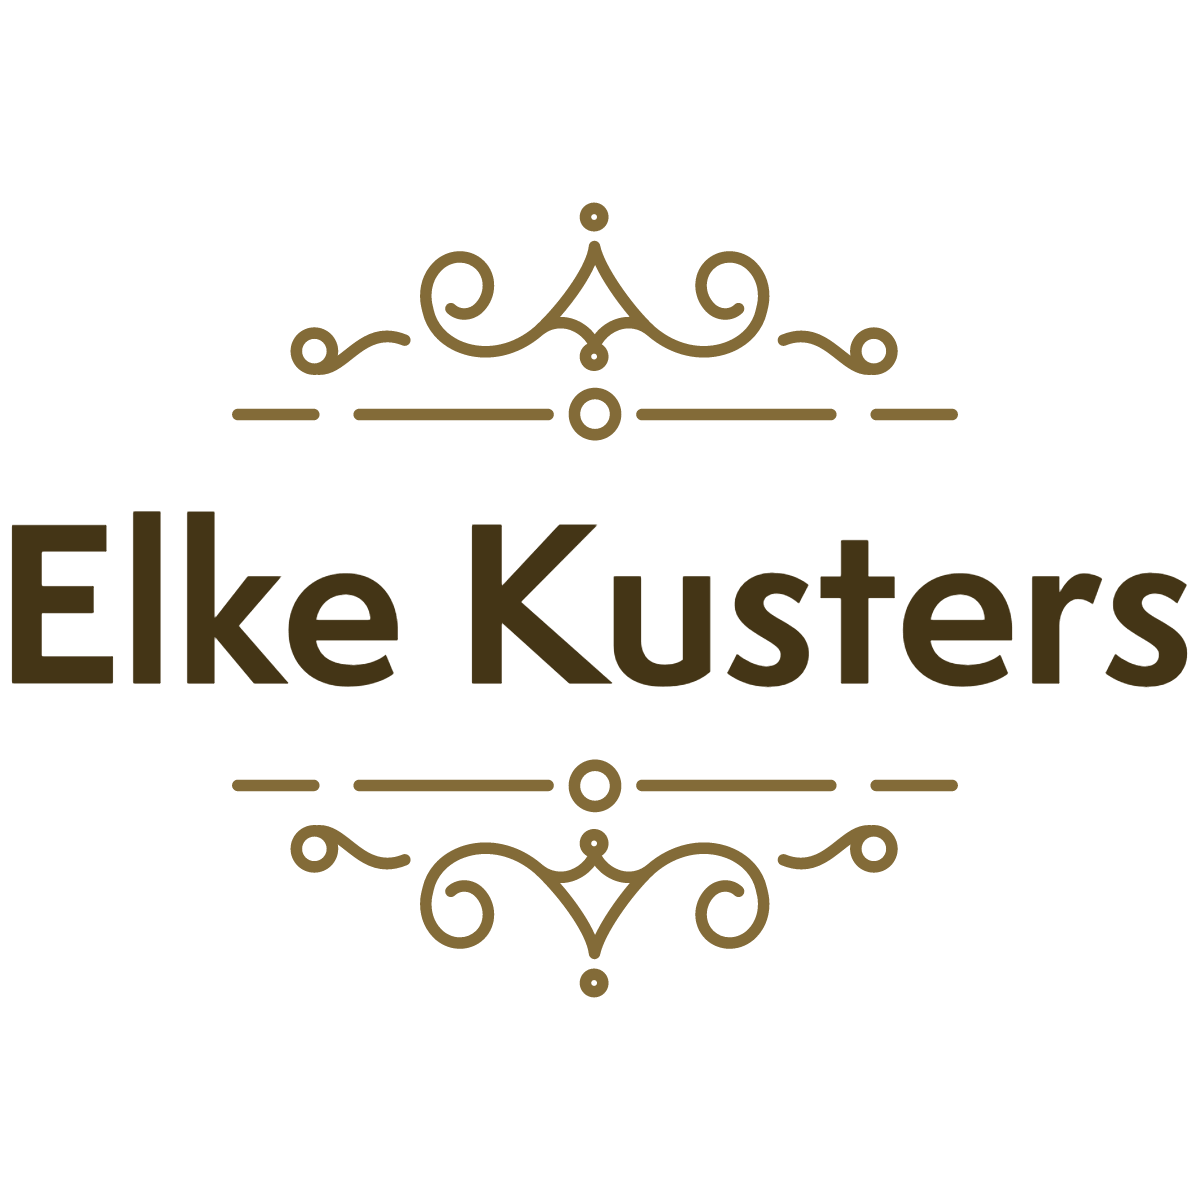 Elke Kusters logo